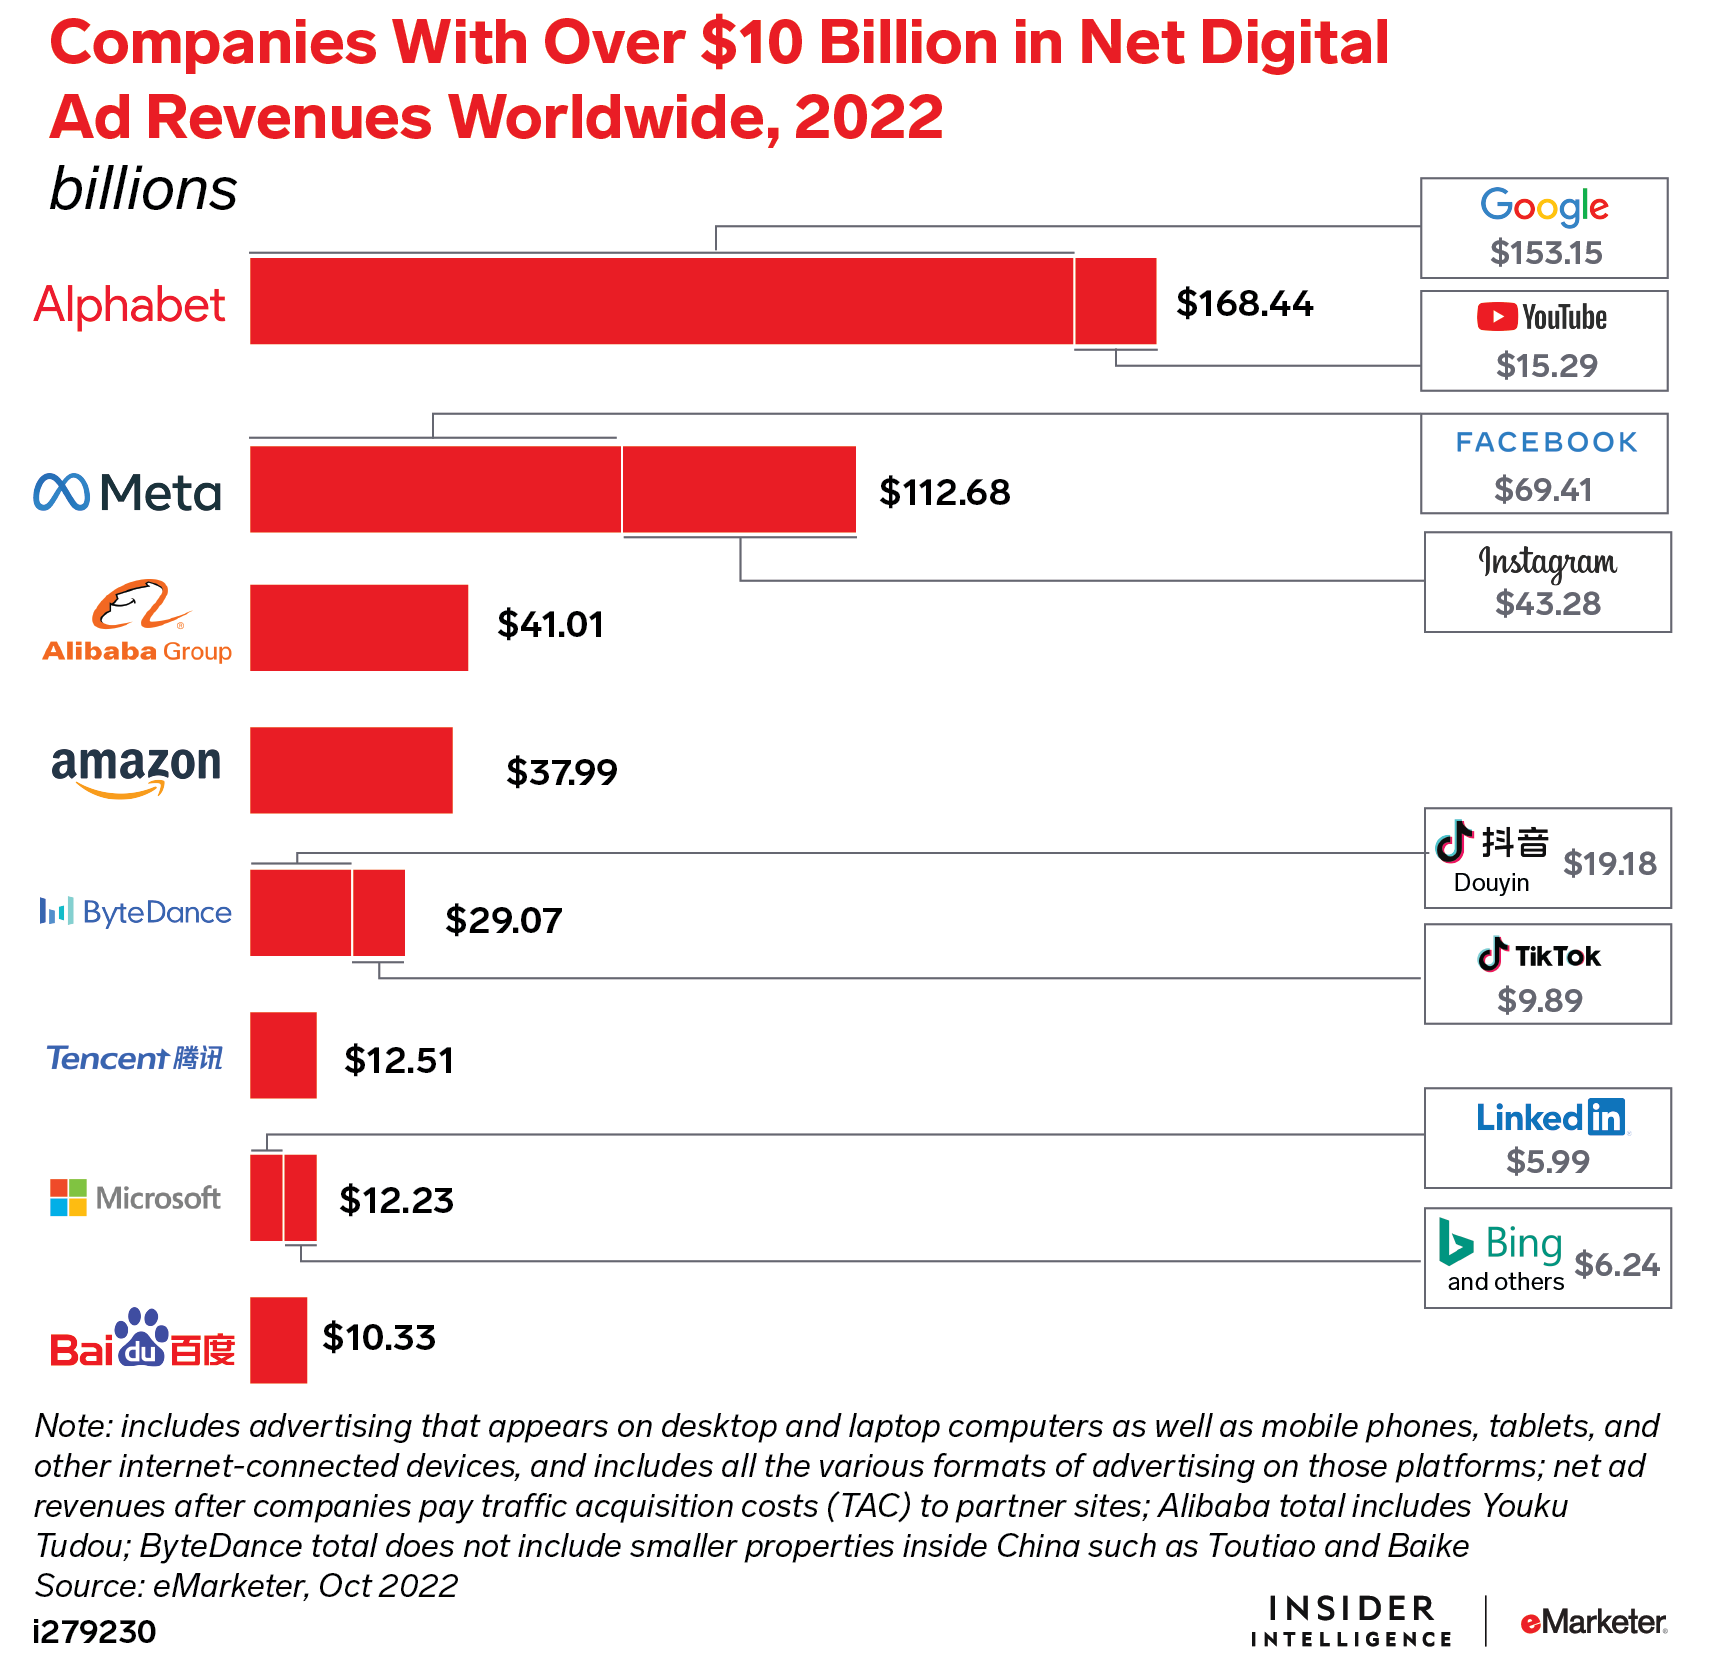 Companies With Over $10 Billion in Net Digital Ad Revenues Worldwide, 2022 (billions)